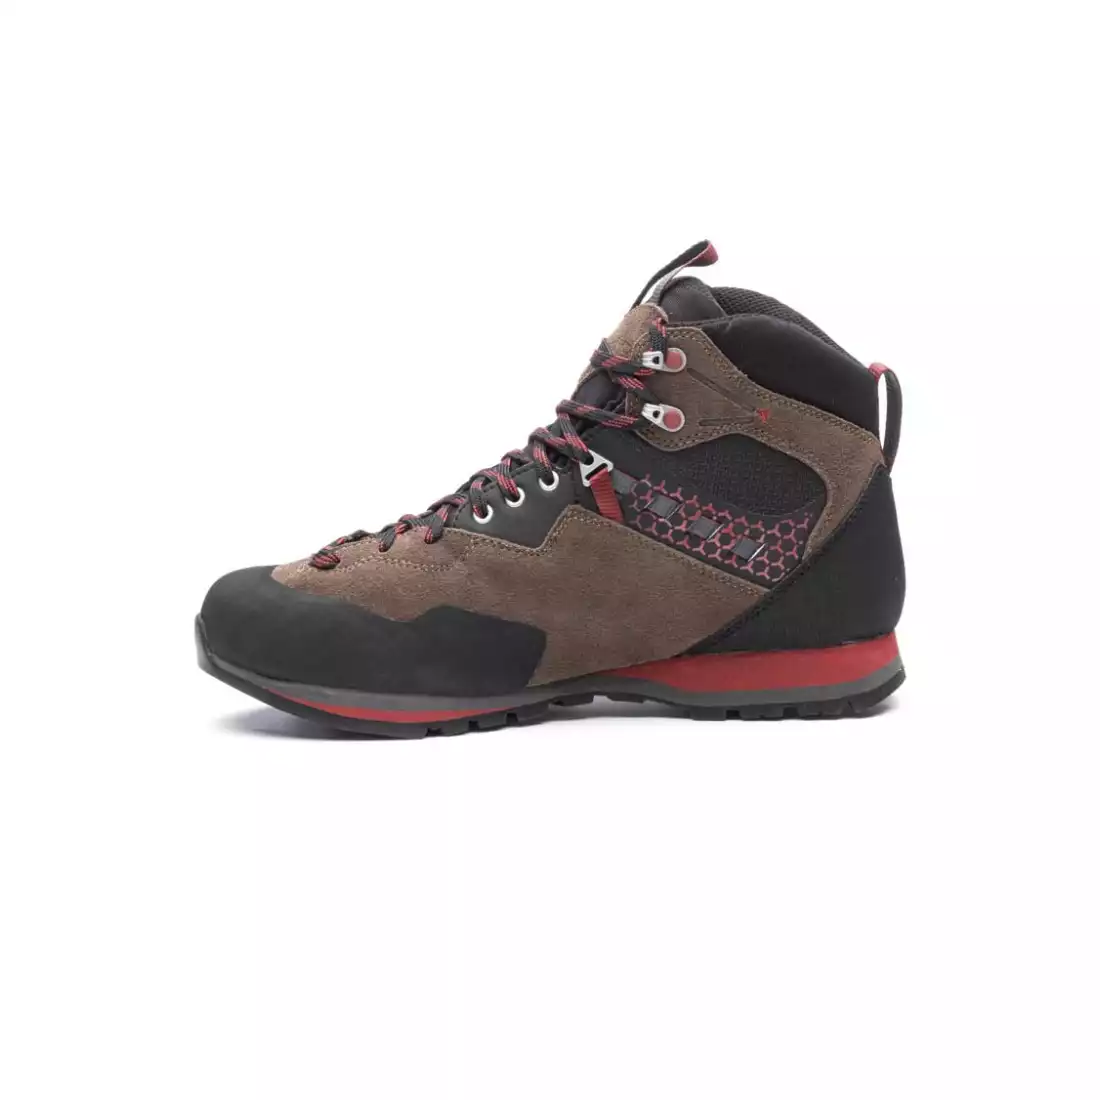 KAYLAND VITRIK MID GTX Approach hiking boots, GORE-TEX, VIBRAM, Brown